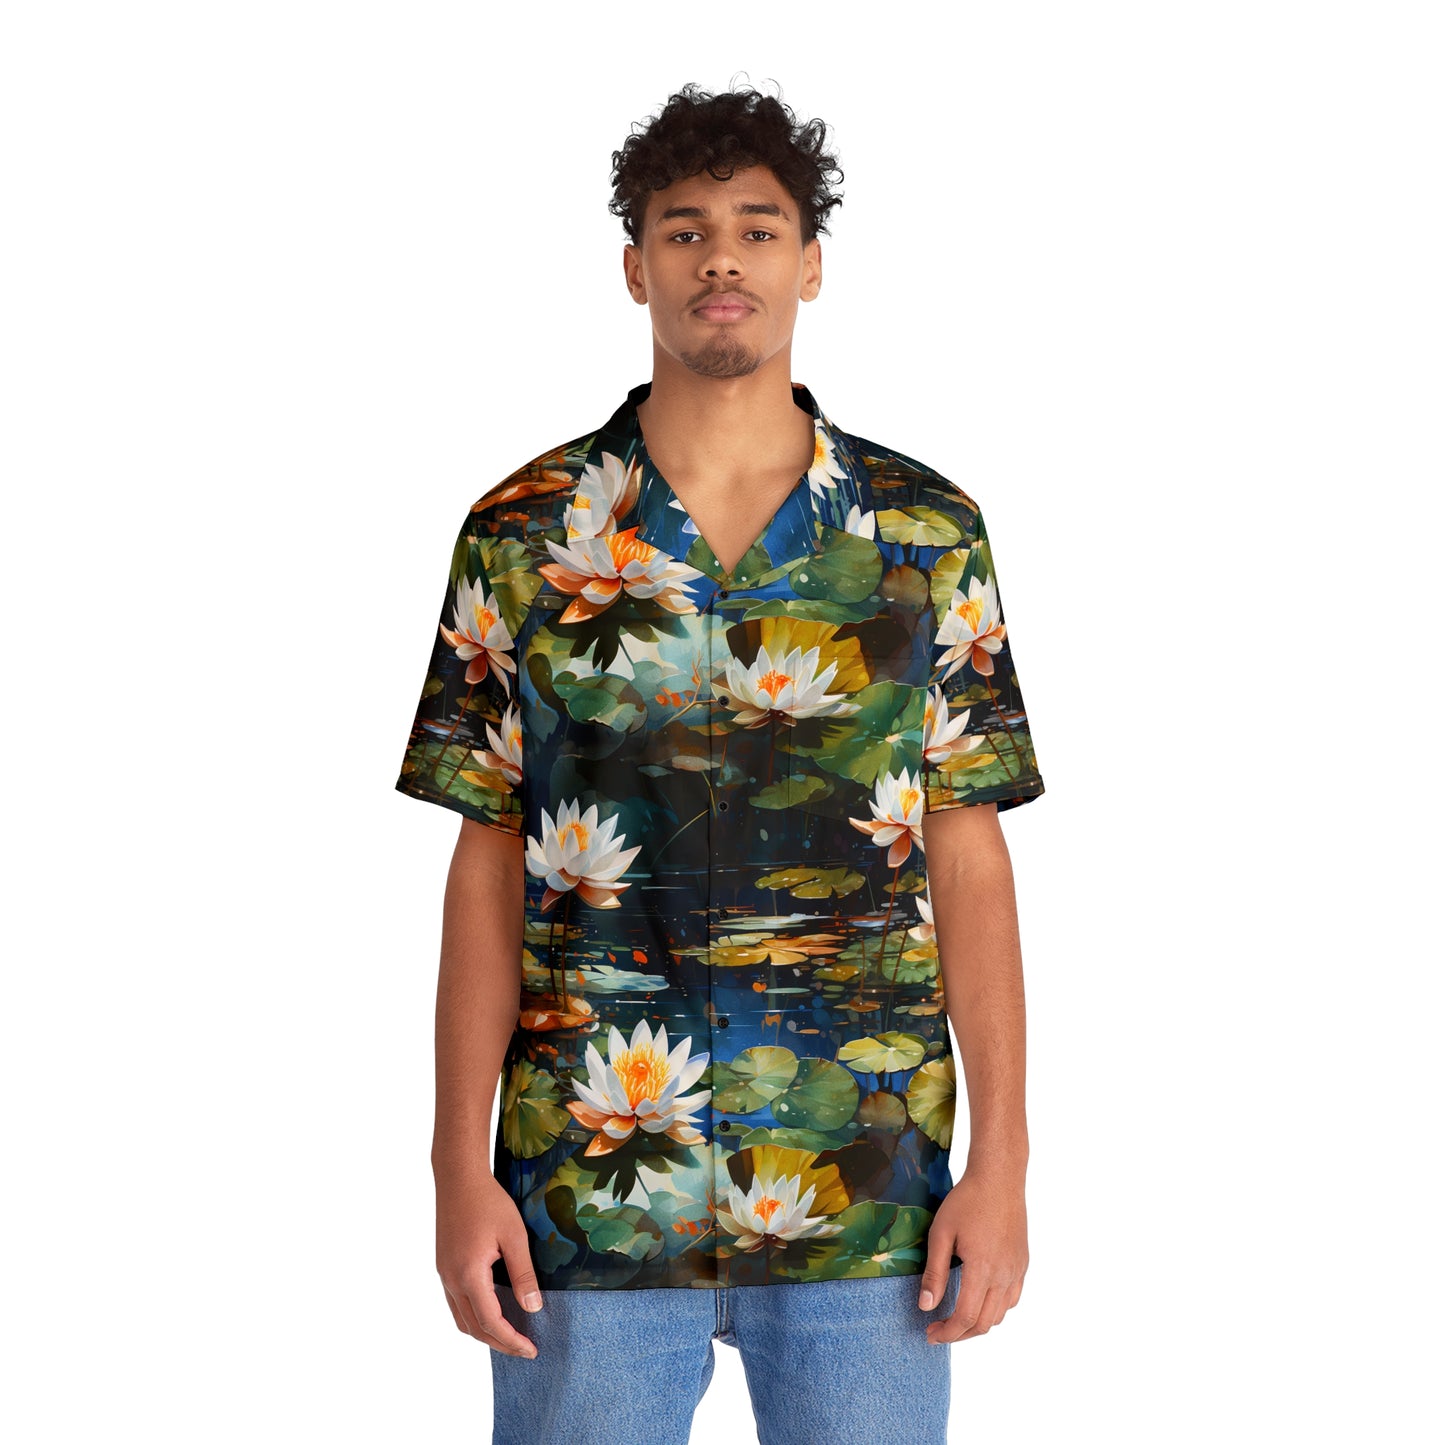 Lily Waterscape Aloha Shirt